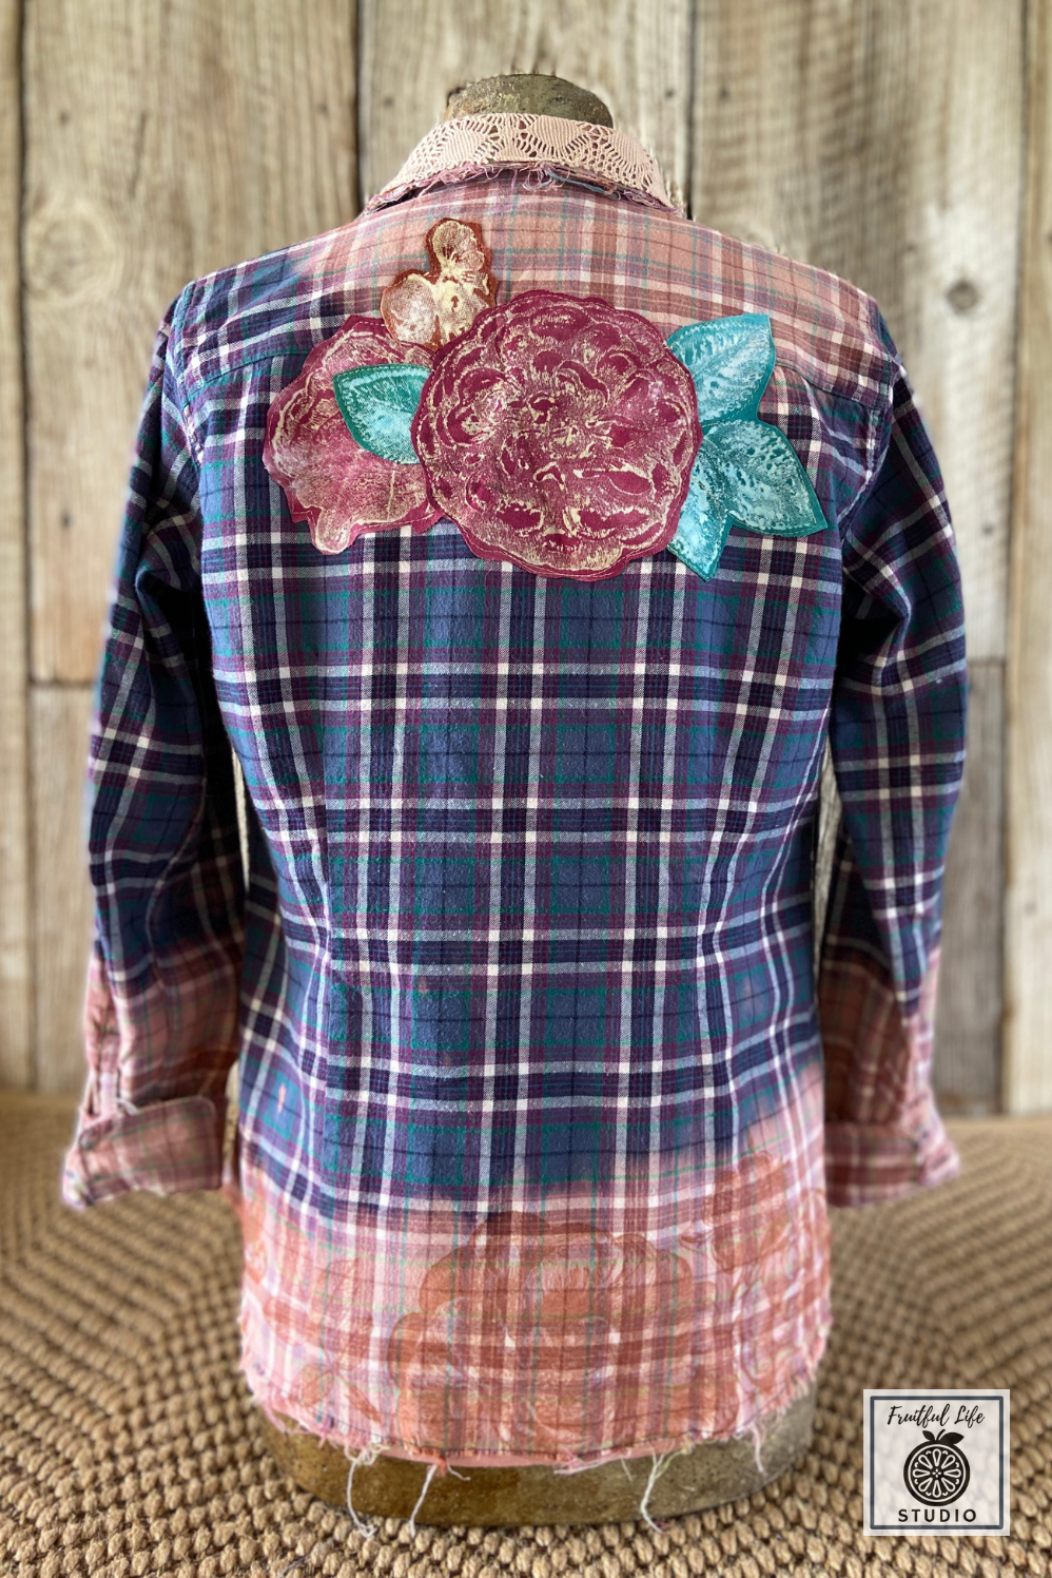 Upcycle Clothes: Refashion Plaid Shirts into Boho Farm Style Beauties